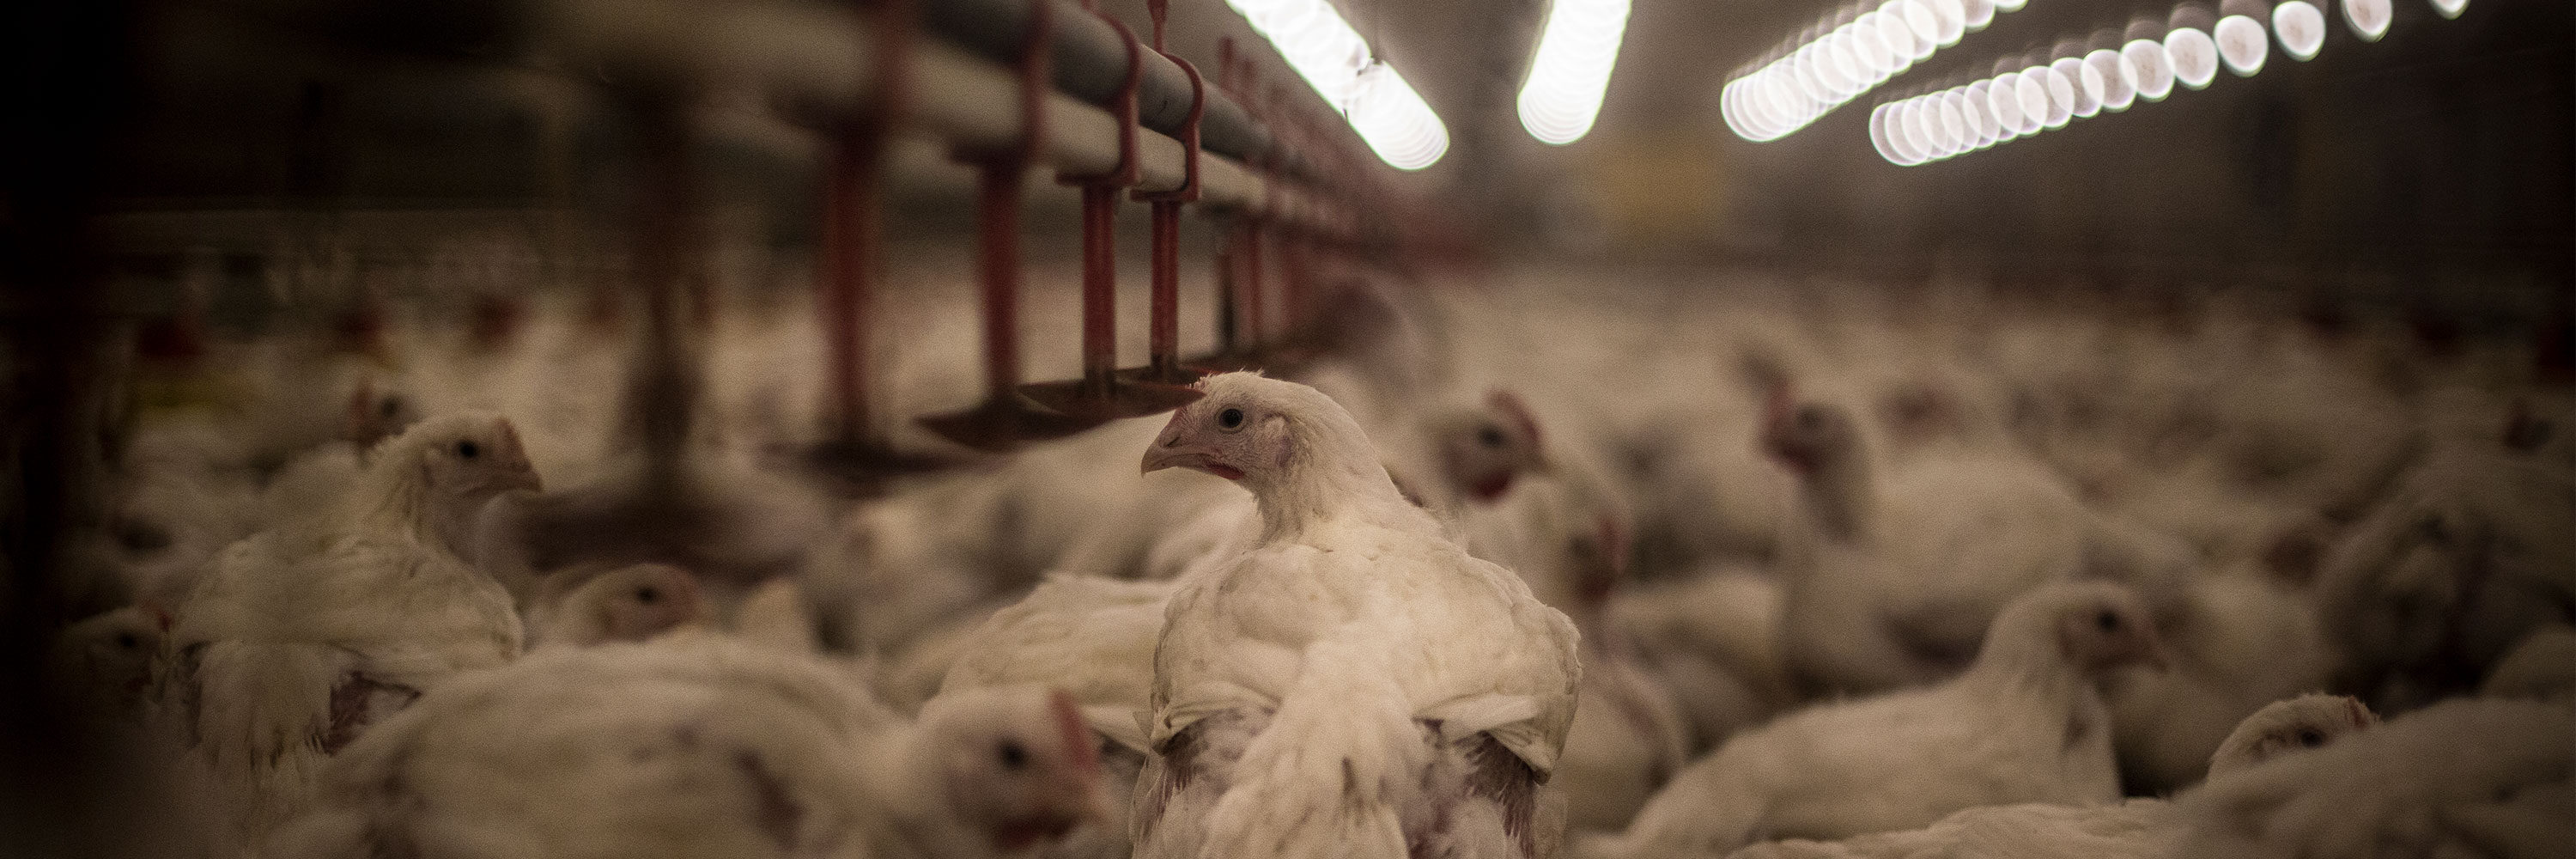 Pollos en granja intensiva